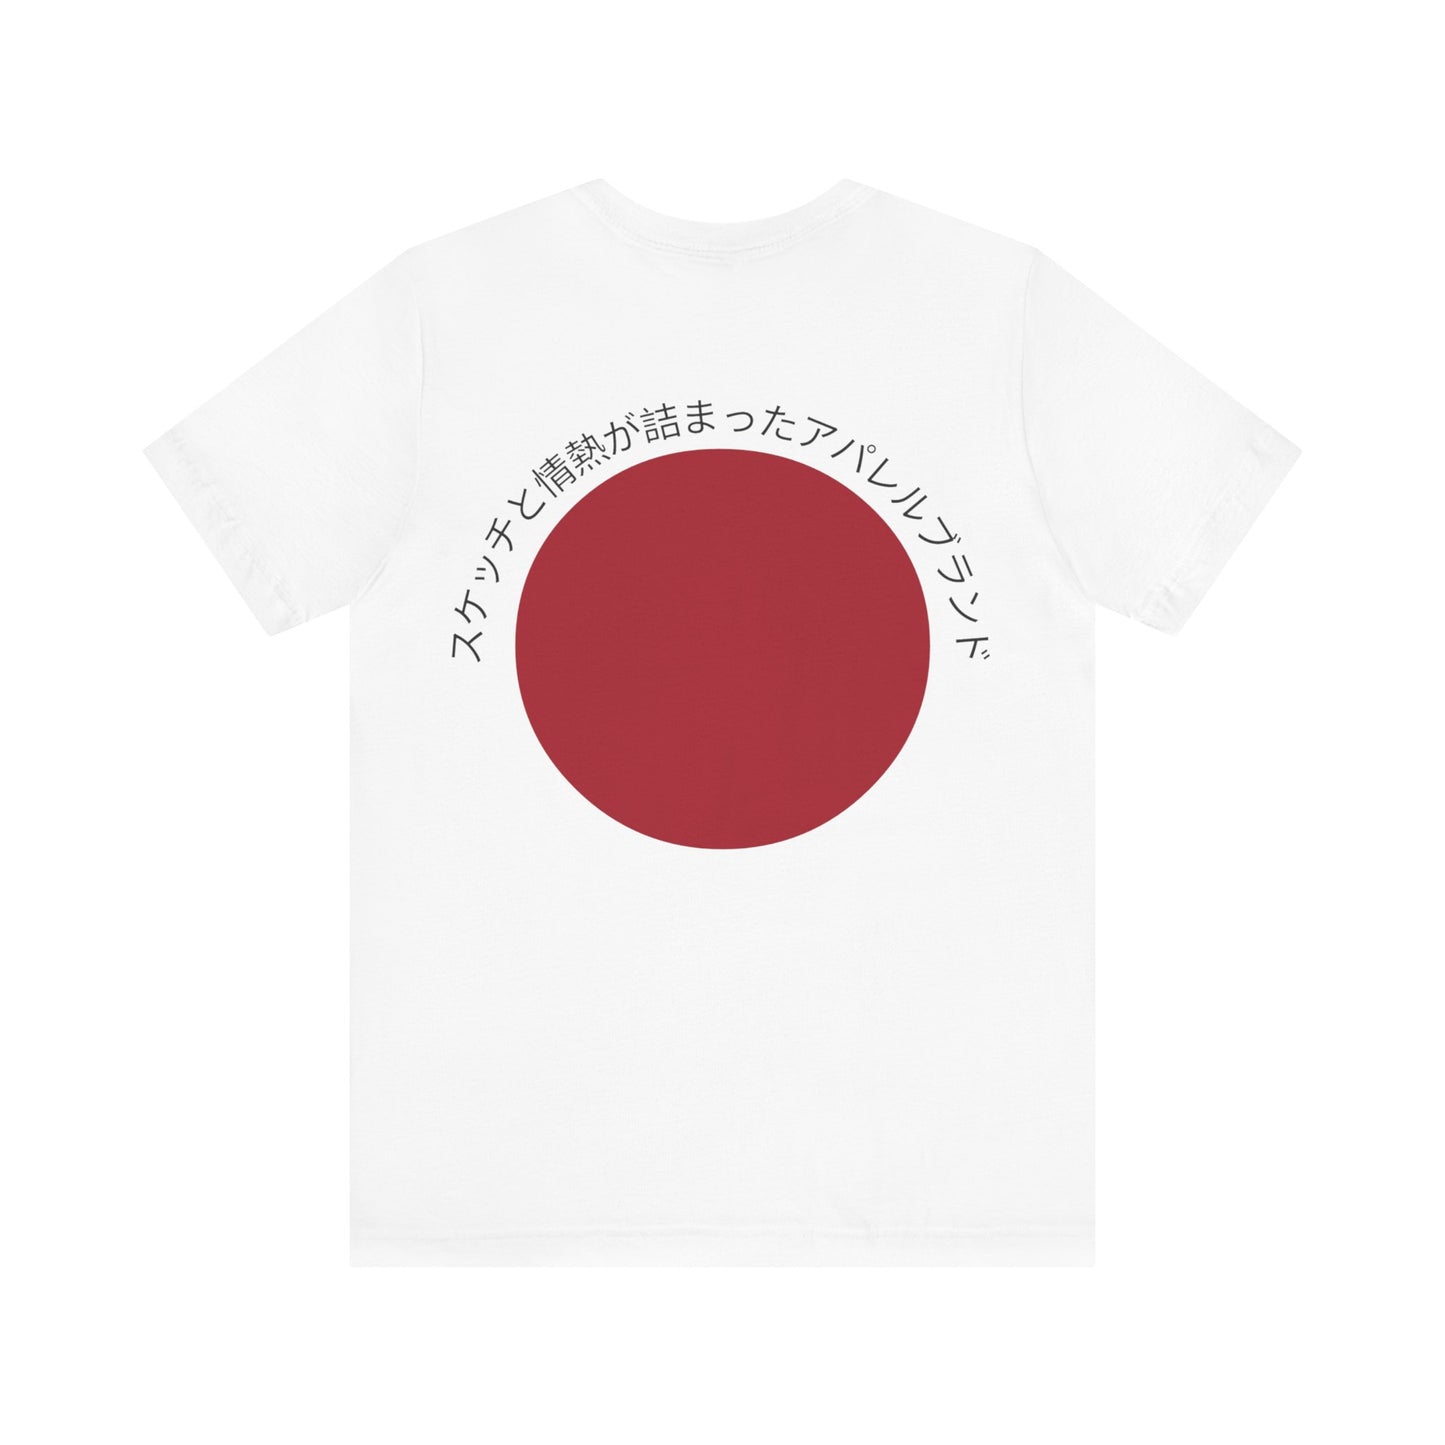 Japan T-shirt (XS)